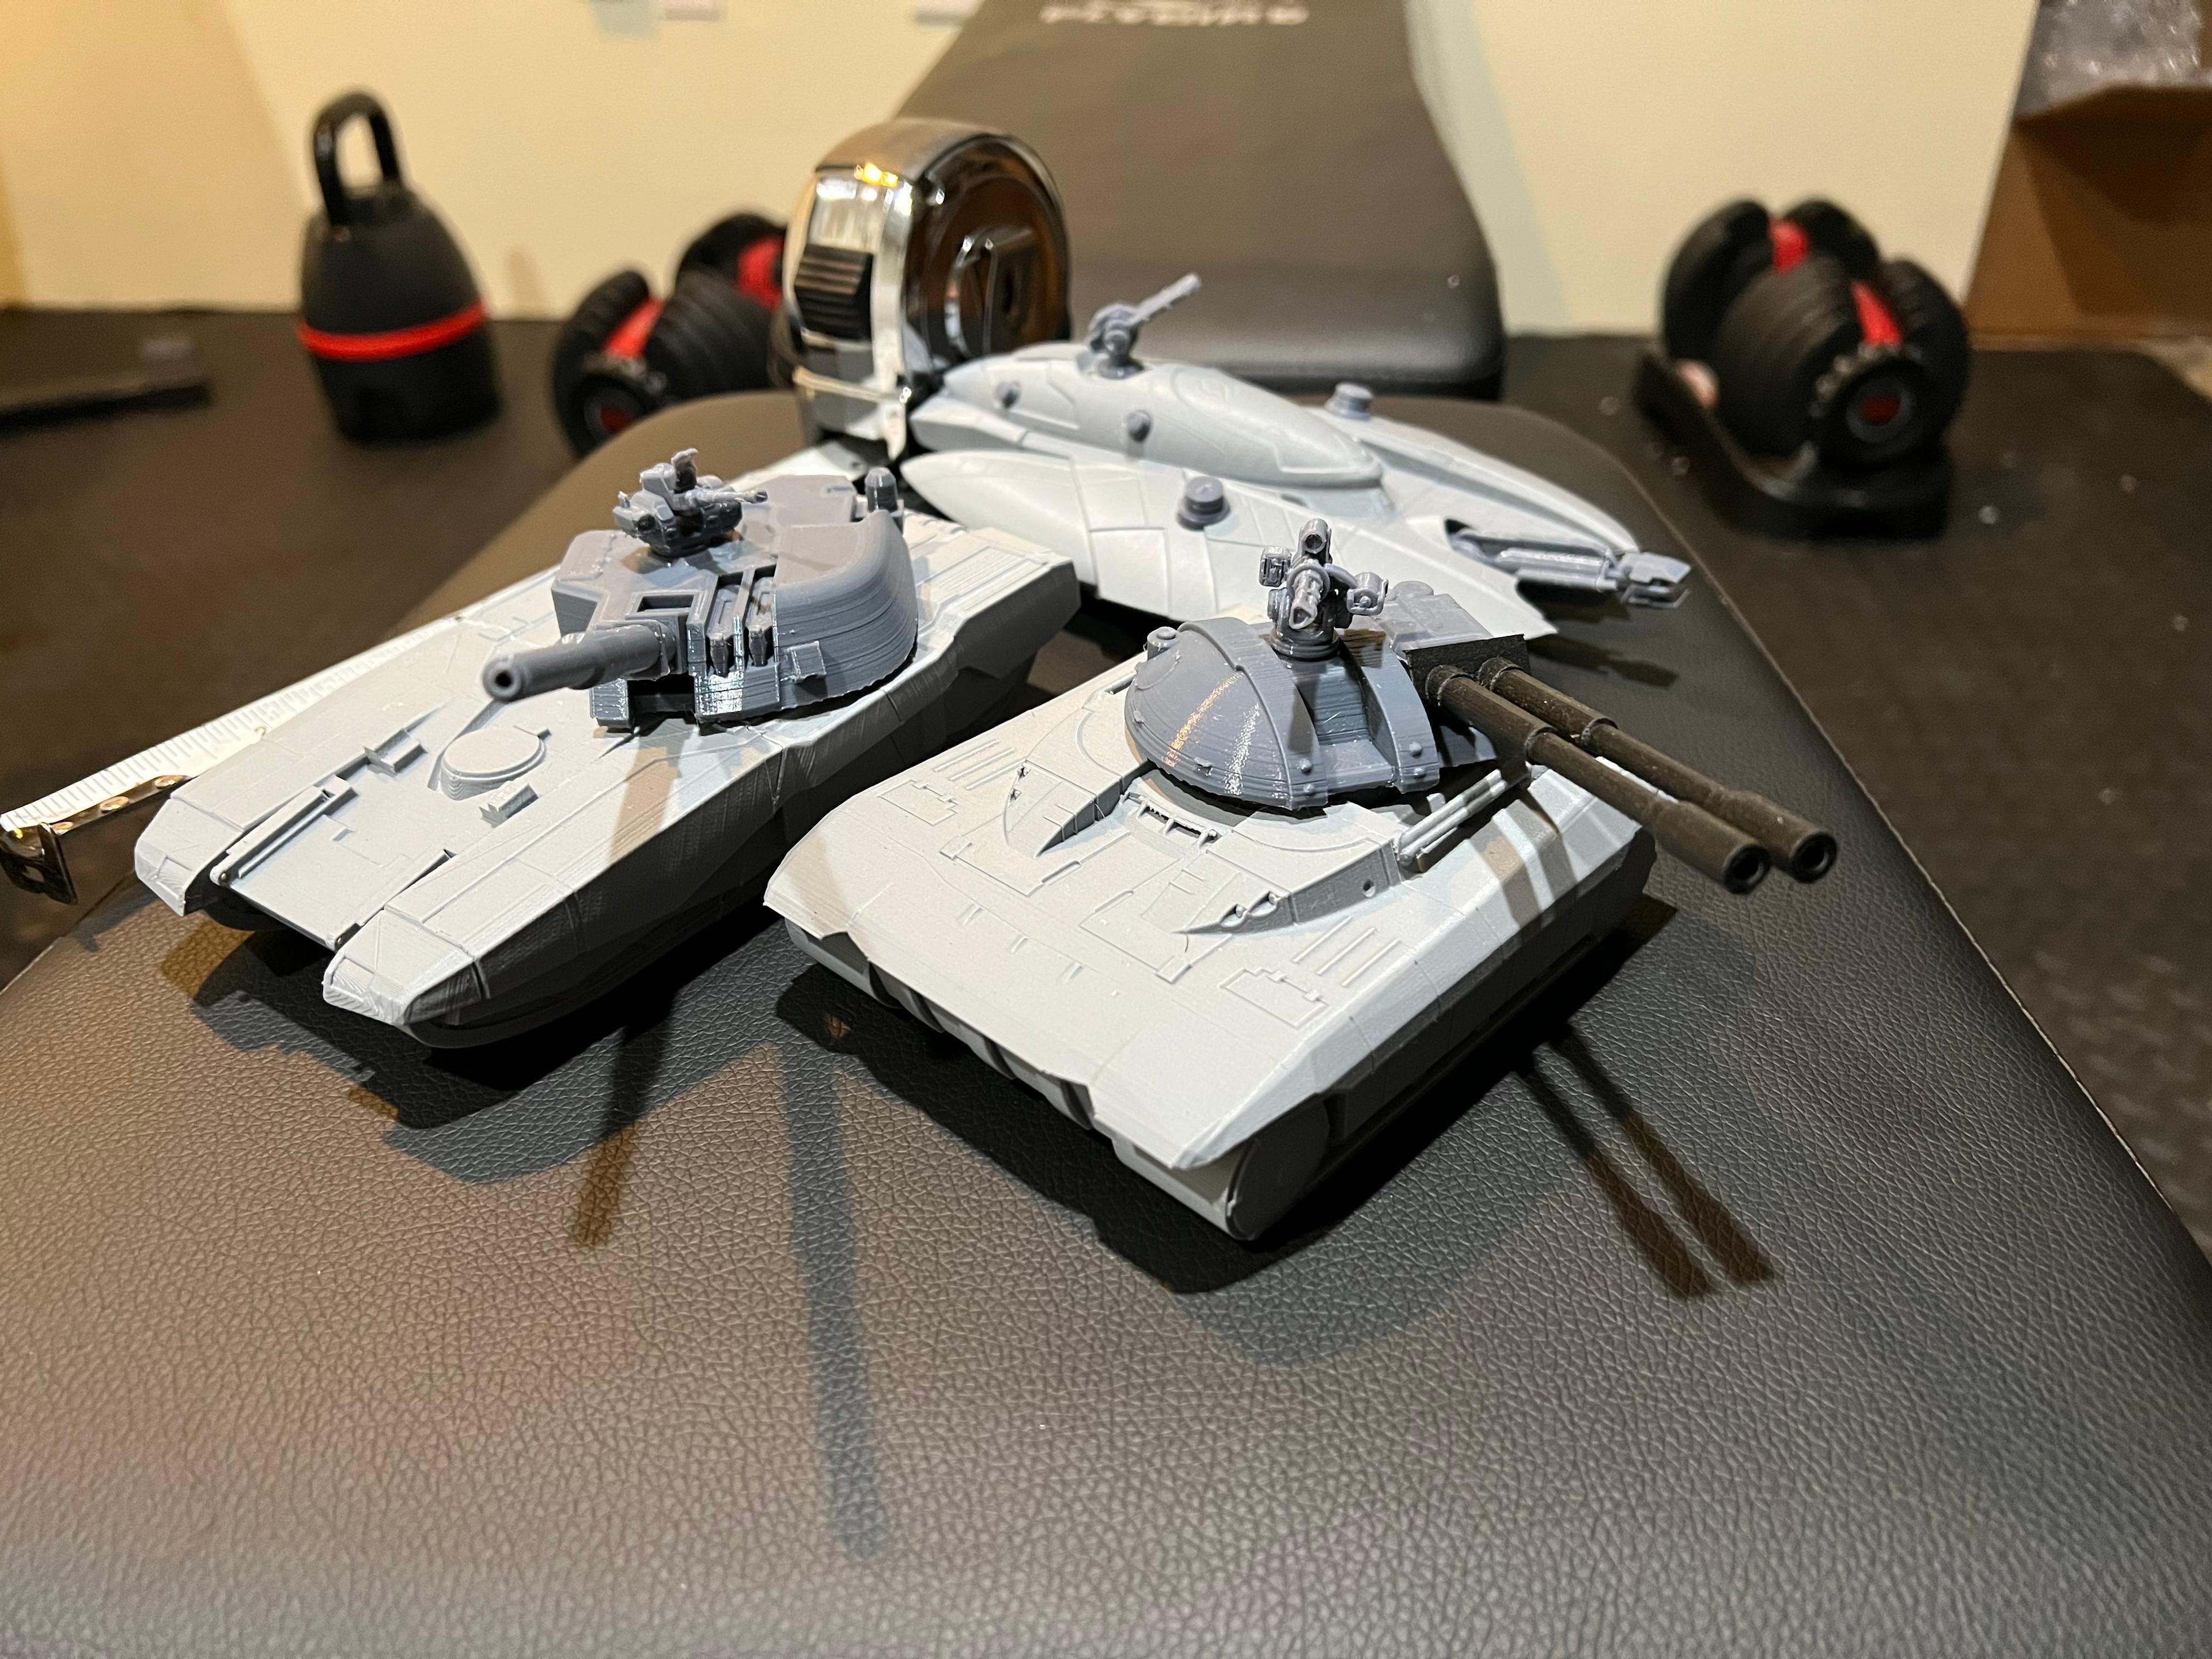 Planetside 2 MBTs (Main Battle Tanks) Magrider, Prowler, Vanguard with Articulating Turrets 3d model